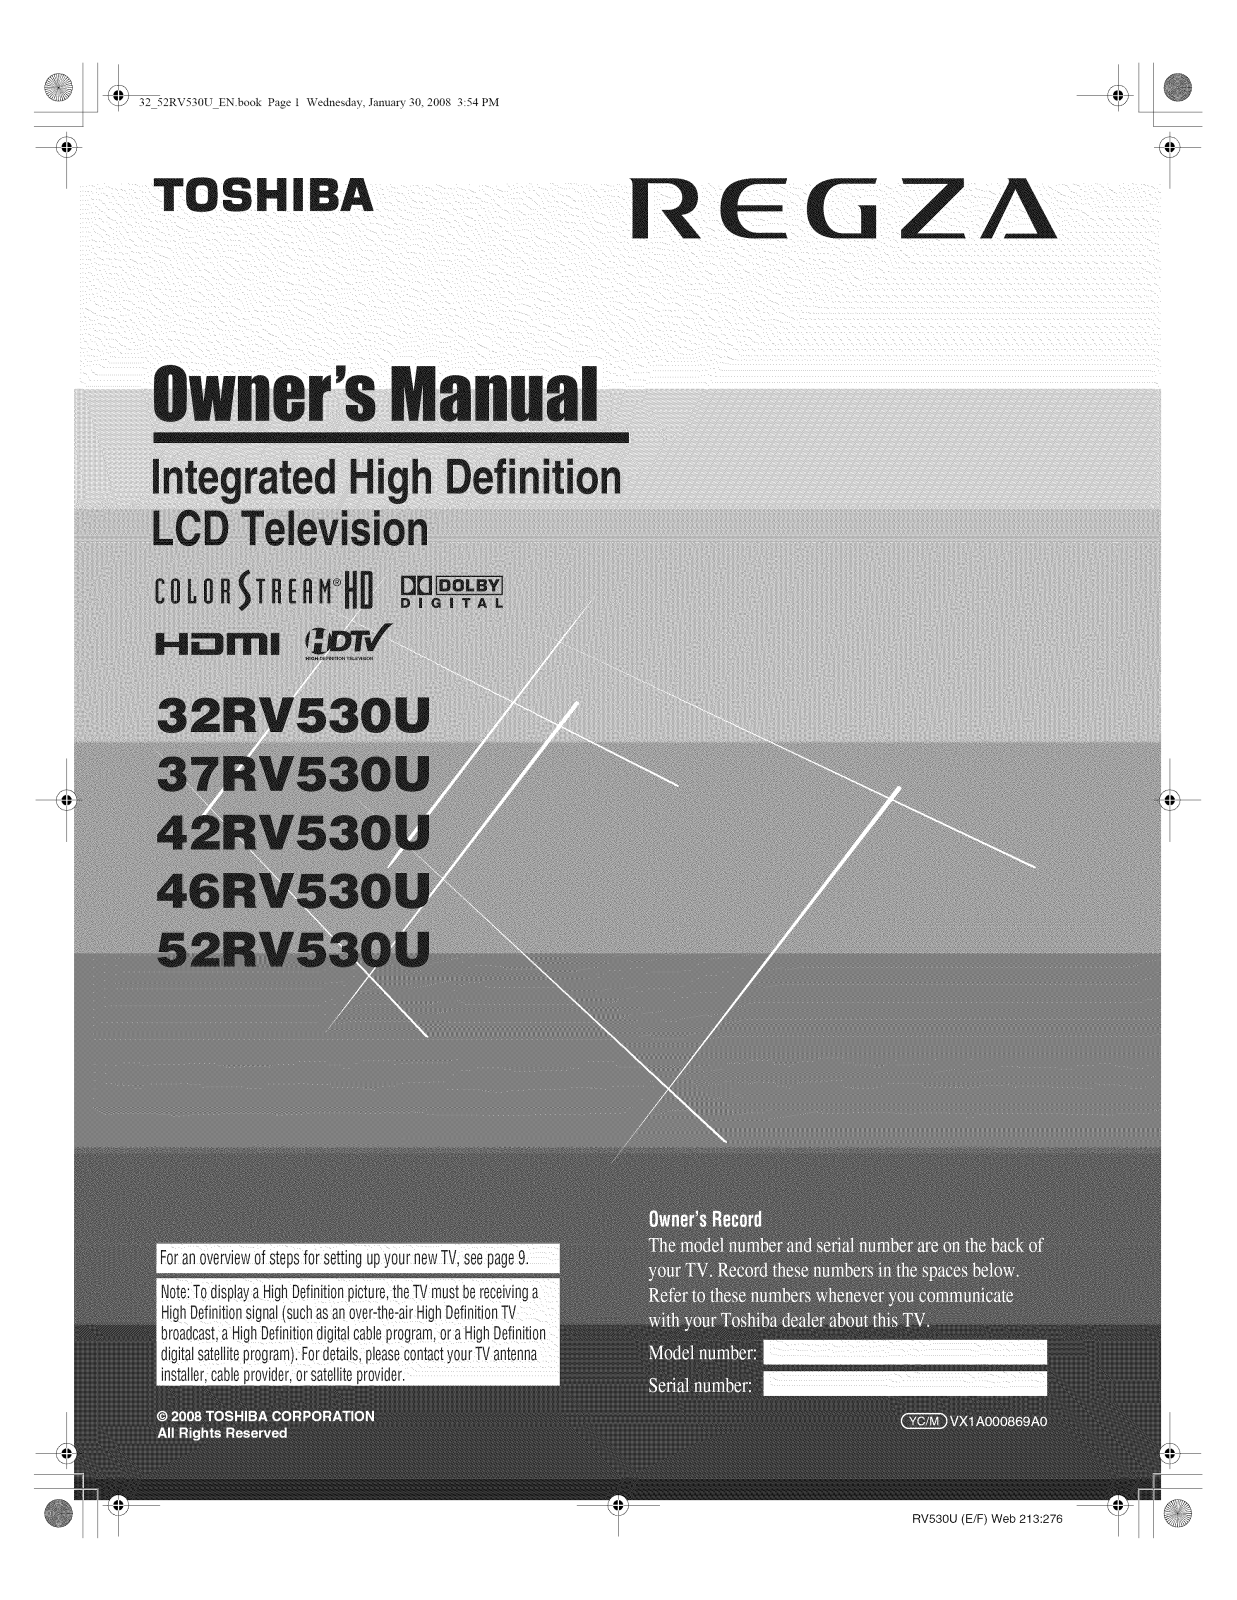 Toshiba REGZA 32RV530U User Manual